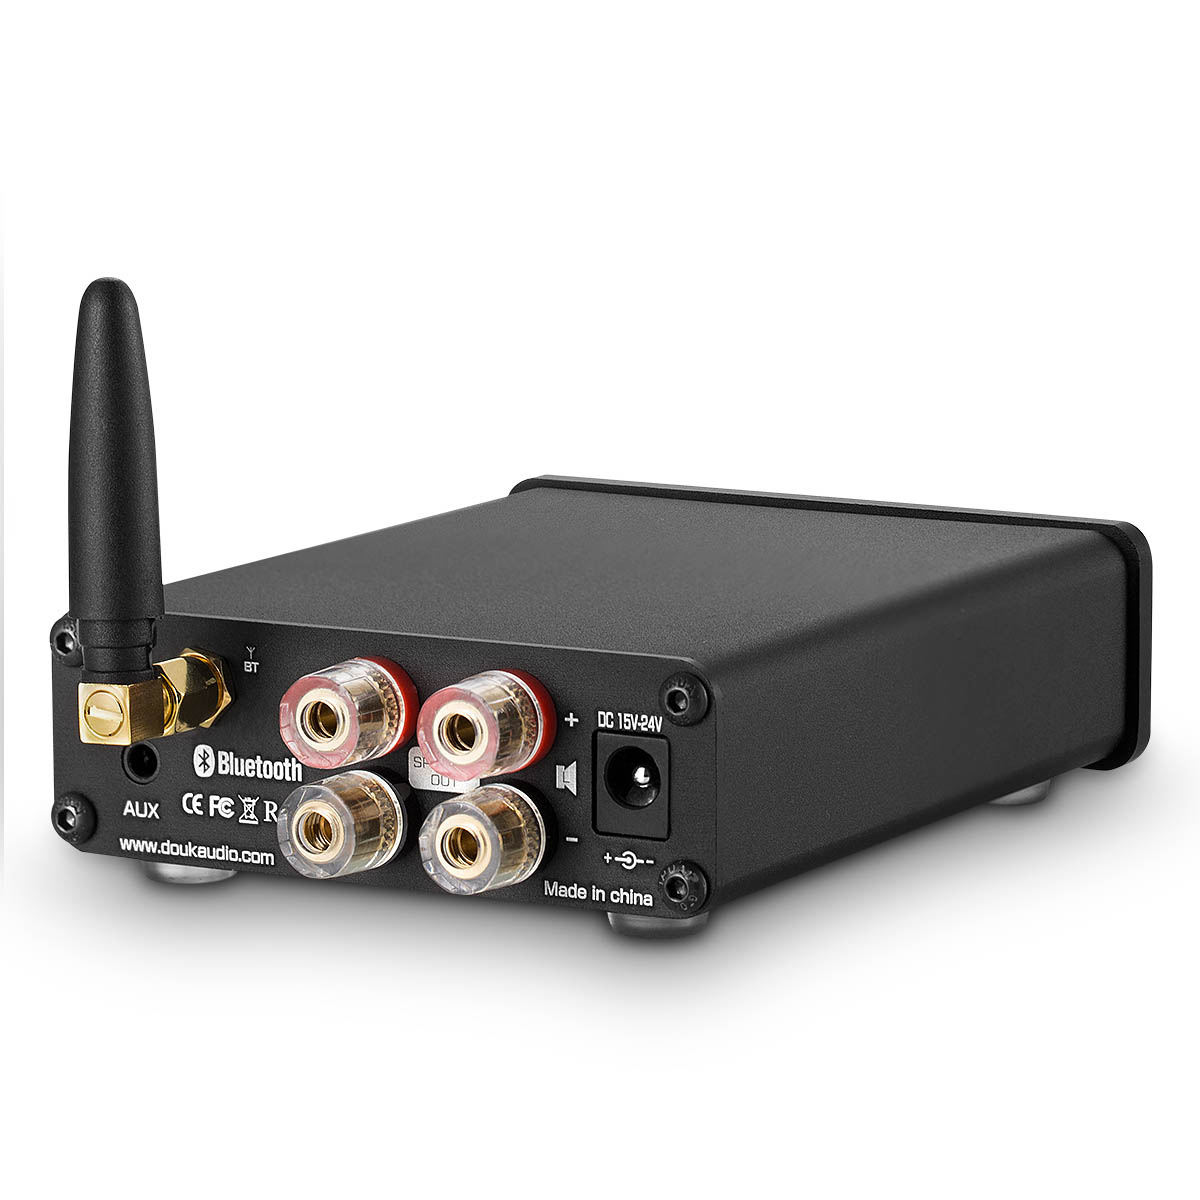 Douk Audio G5 HiFi Bluetooth 5.0 デジタル パワーアンプ Mini 